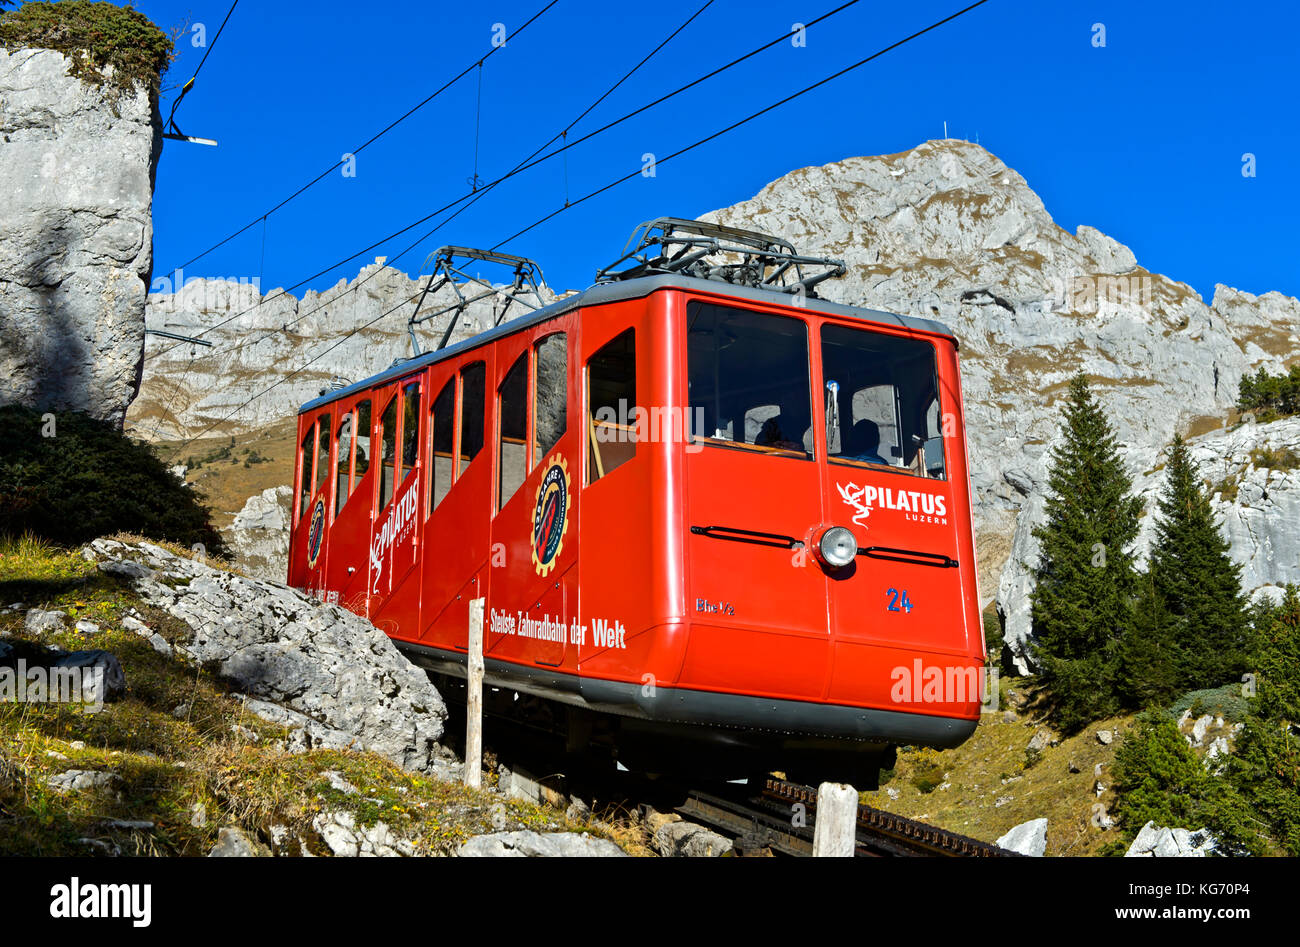 Red railcar of the Pilatus Railway on the way to the top of the Pilatus massif, Alpnachstad, Switzerland Stock Photo